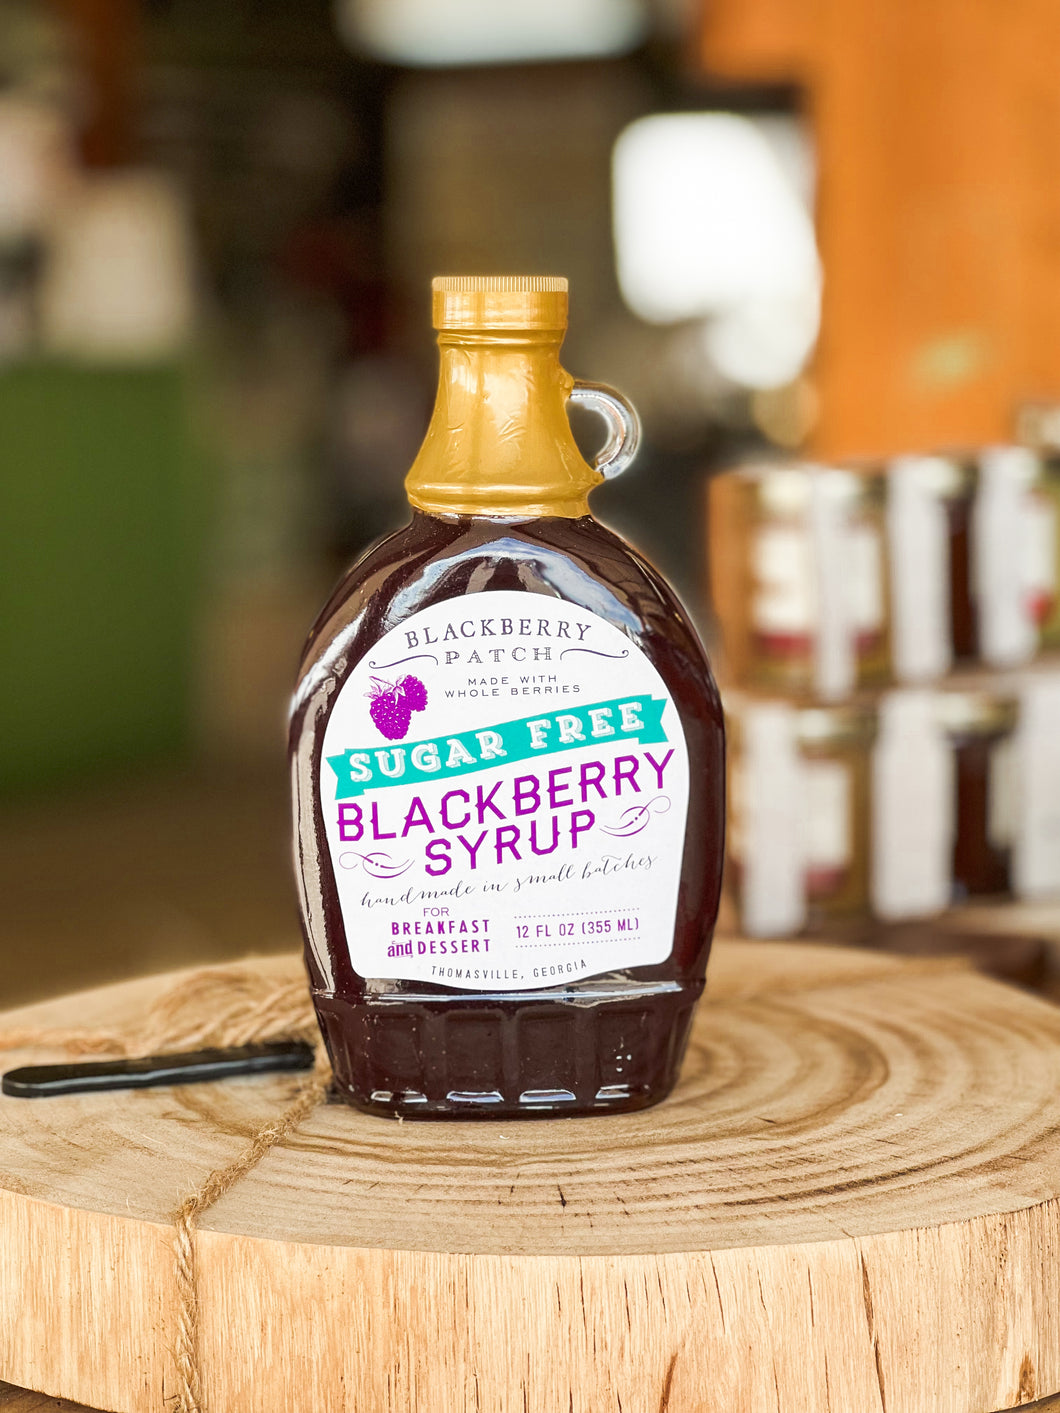 Sugar Free Blackberry Syrup